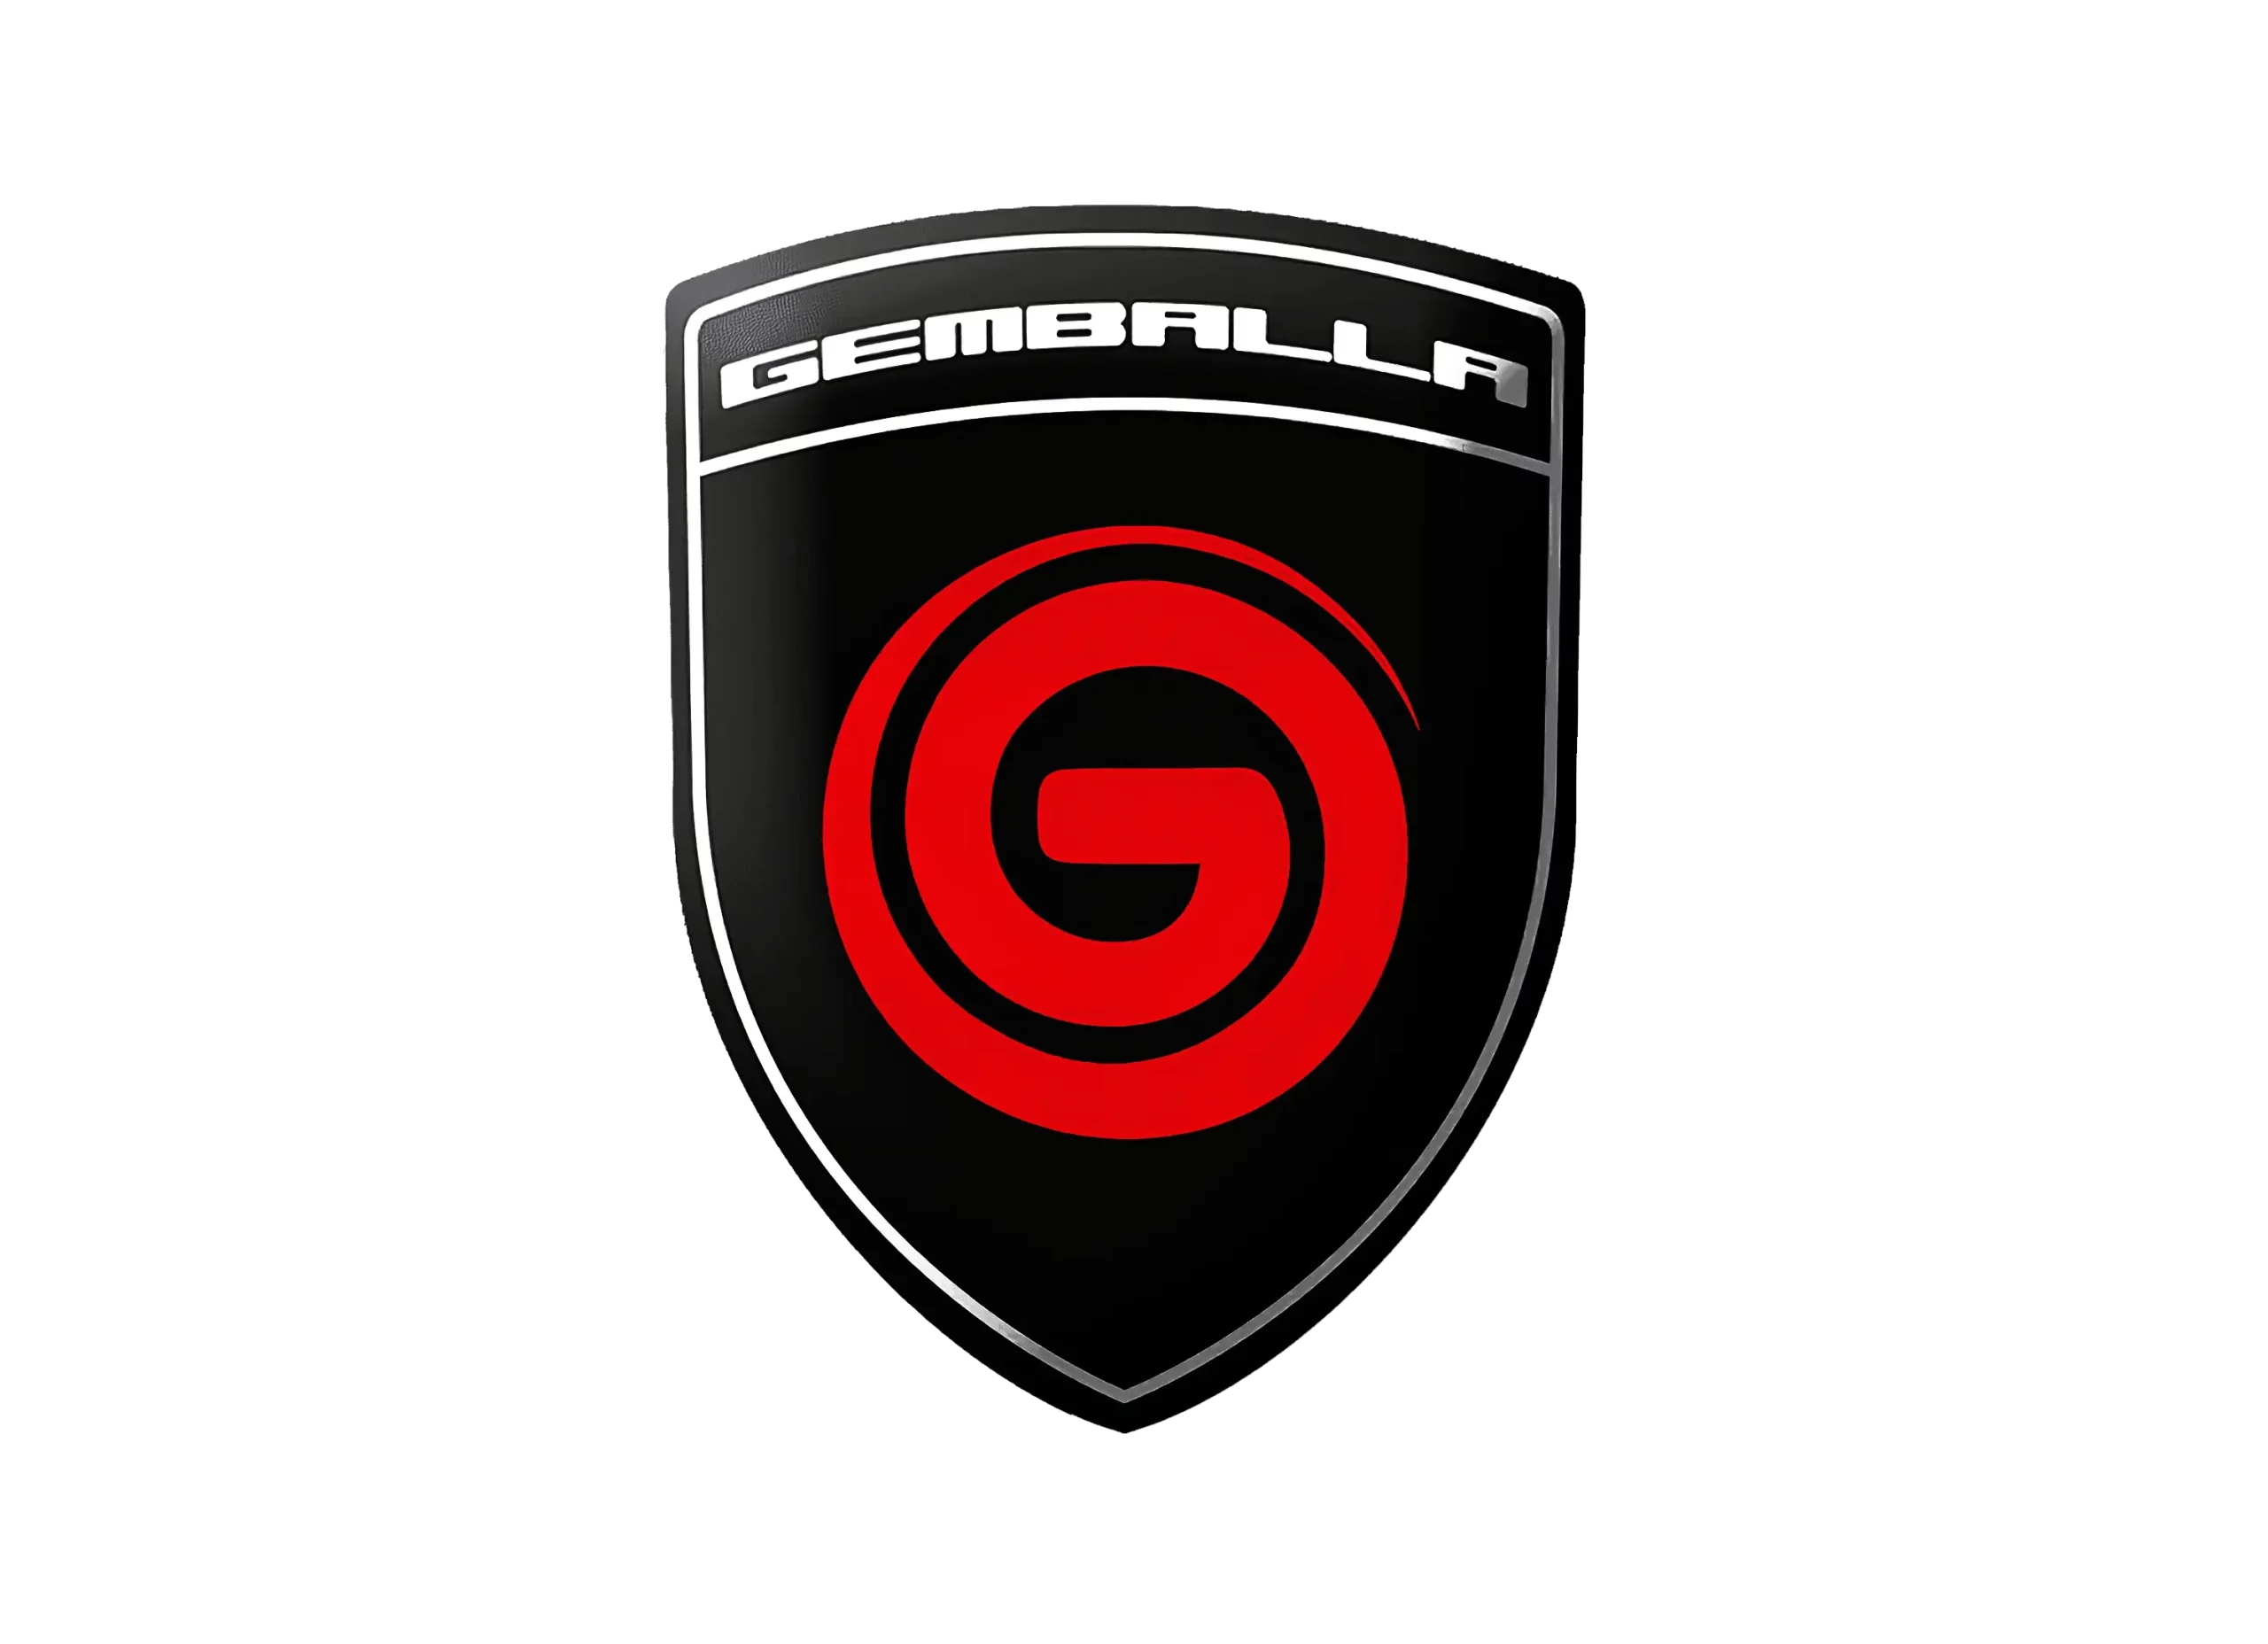 Gemballa logo 2011-2017